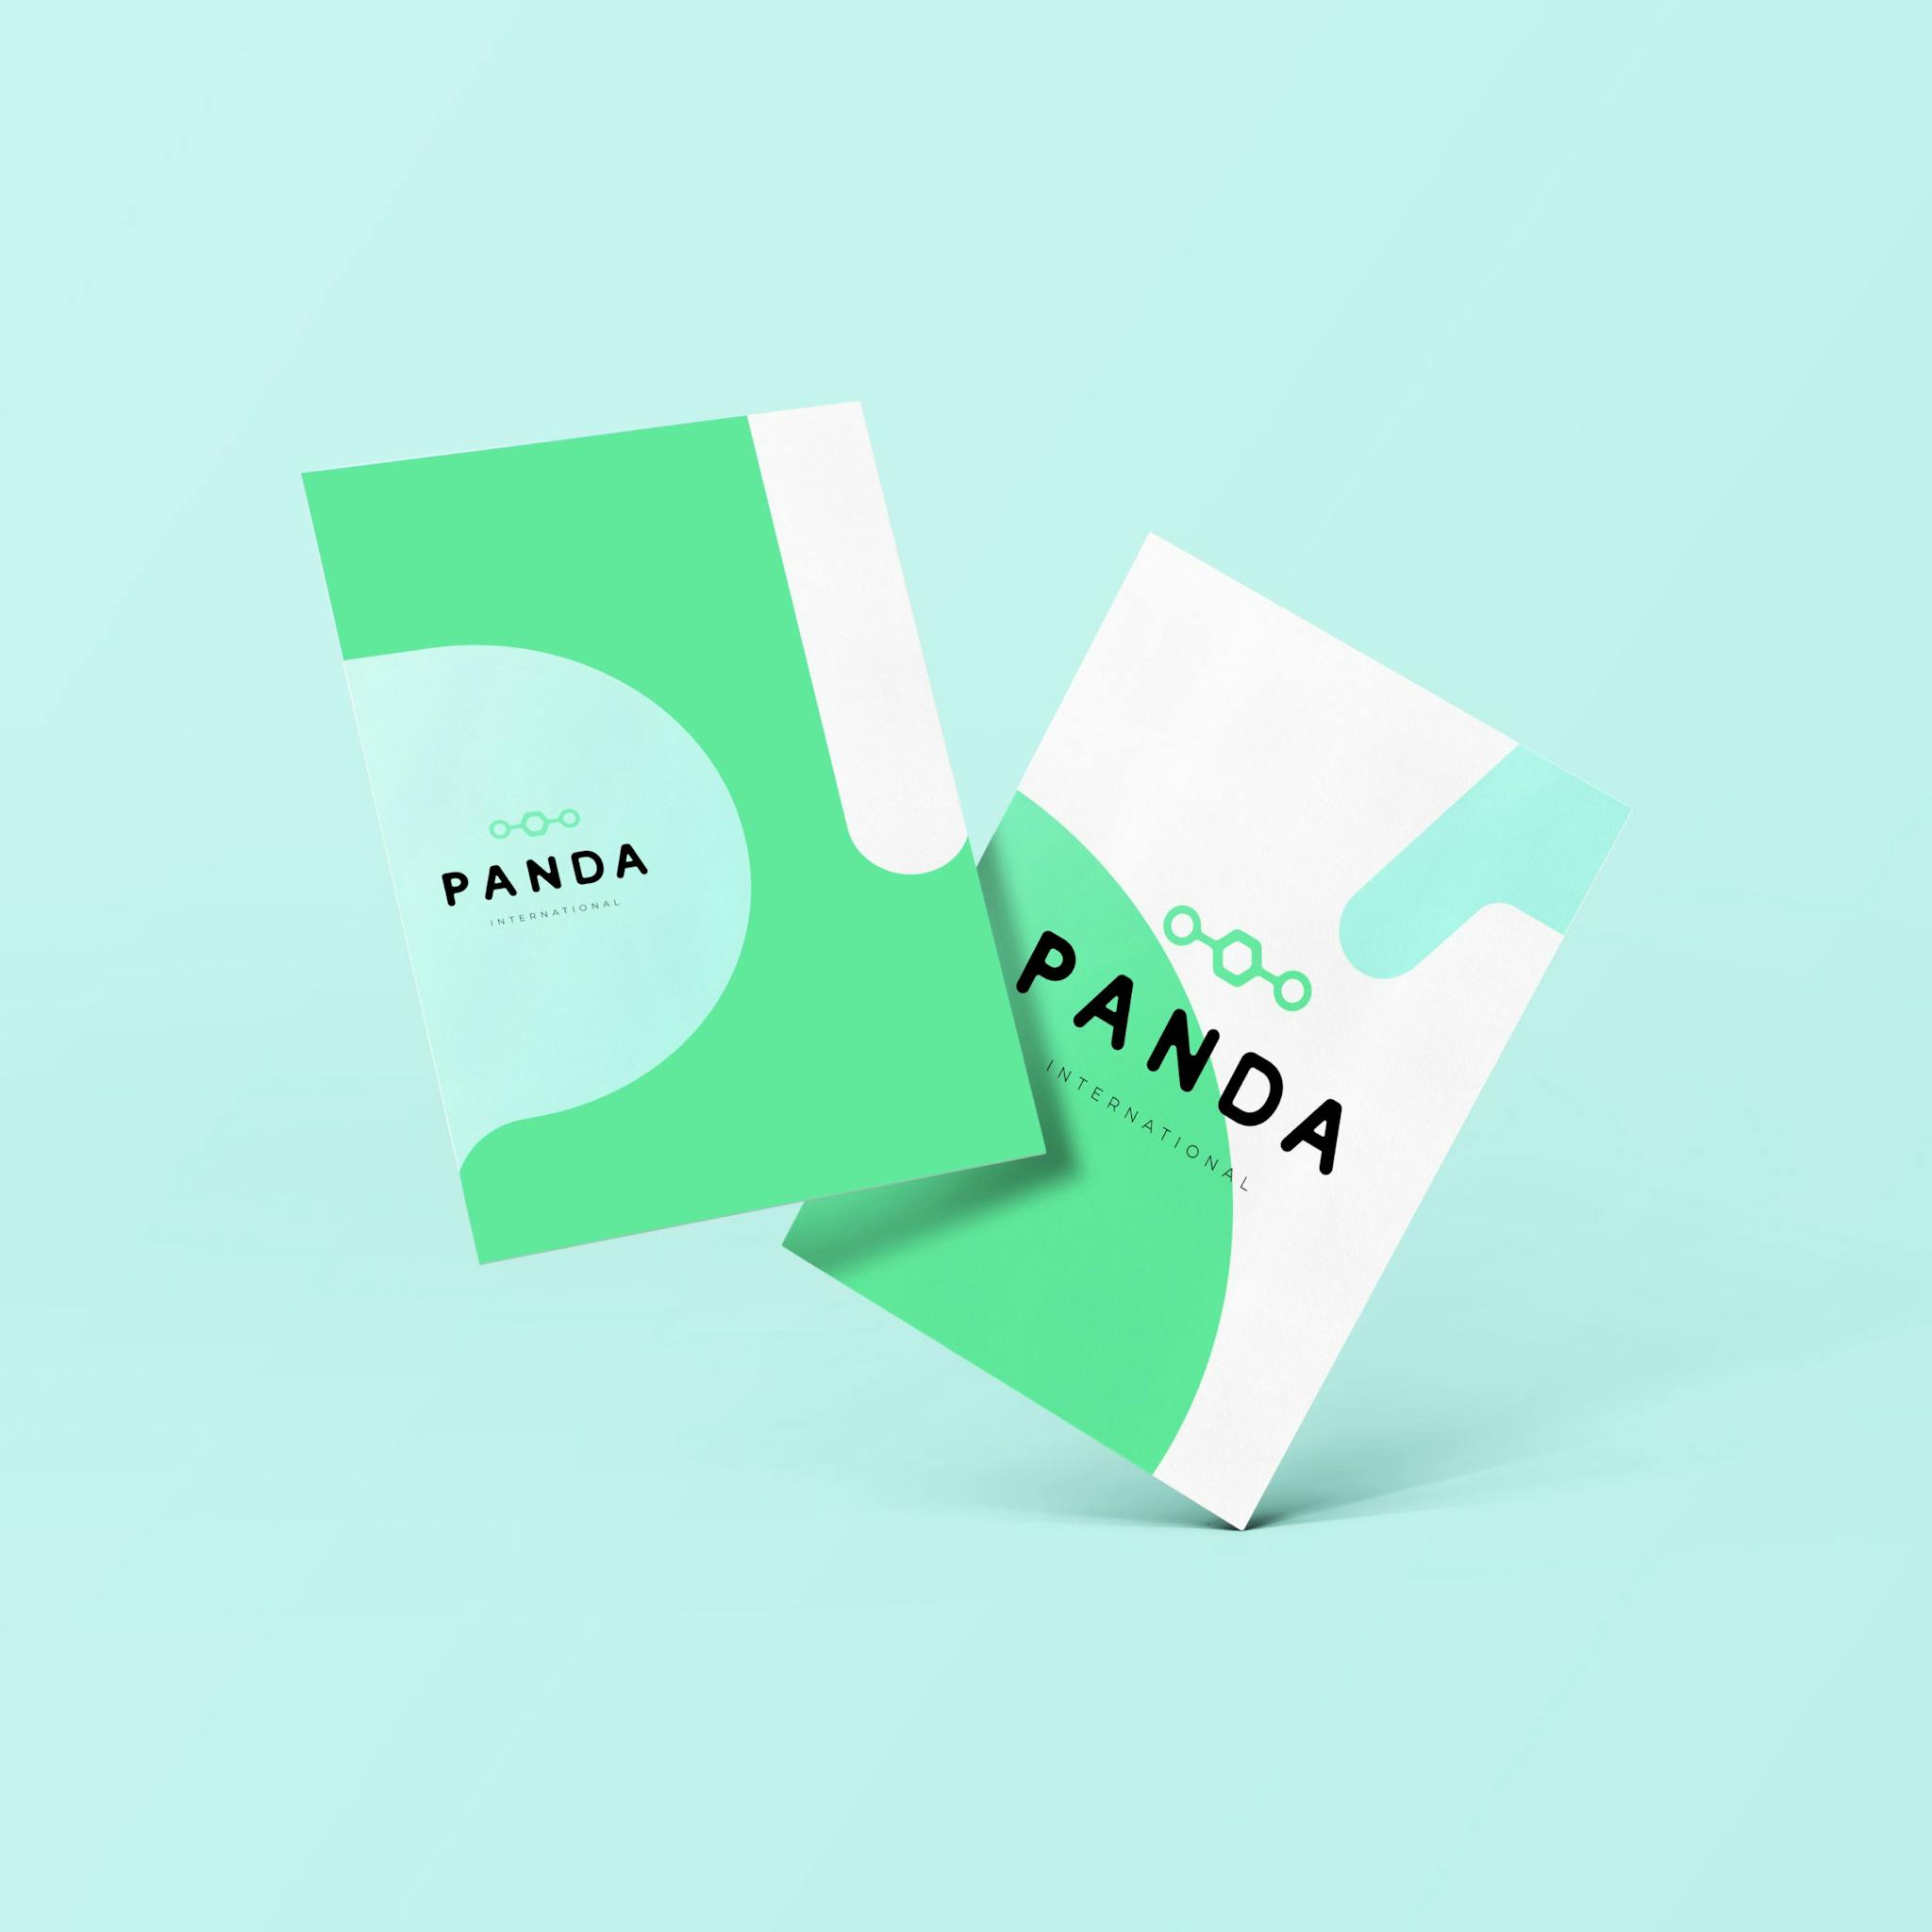 thebrink_amsterdam_panda_identity_branding_cover.jpg